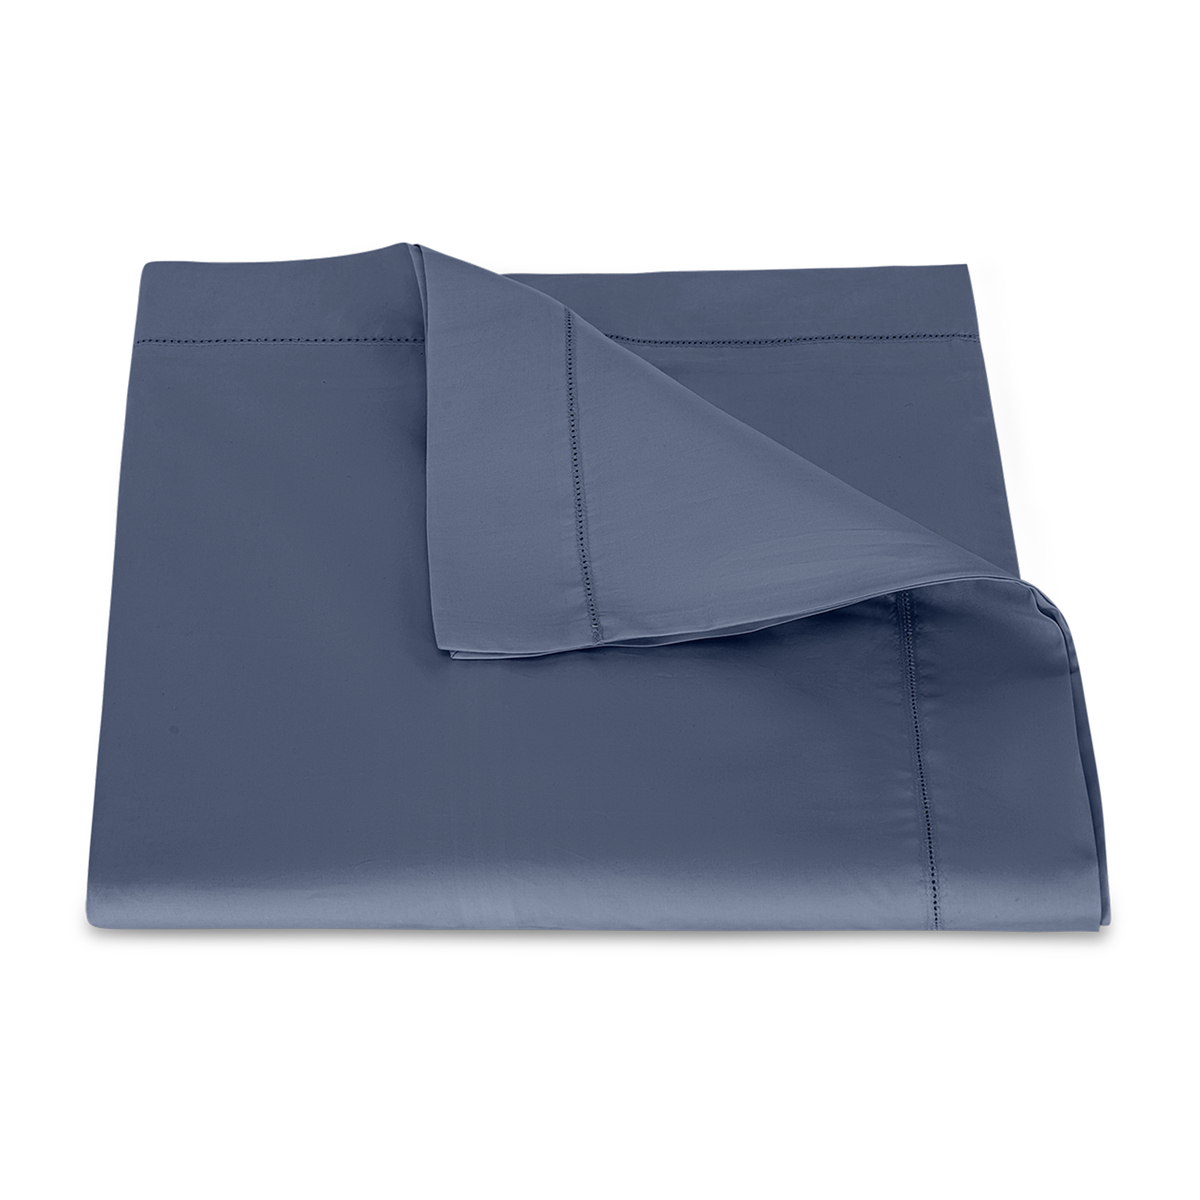 Duvet Cover of Matouk Milano Hemstitch Bedding in Color Steel Blue